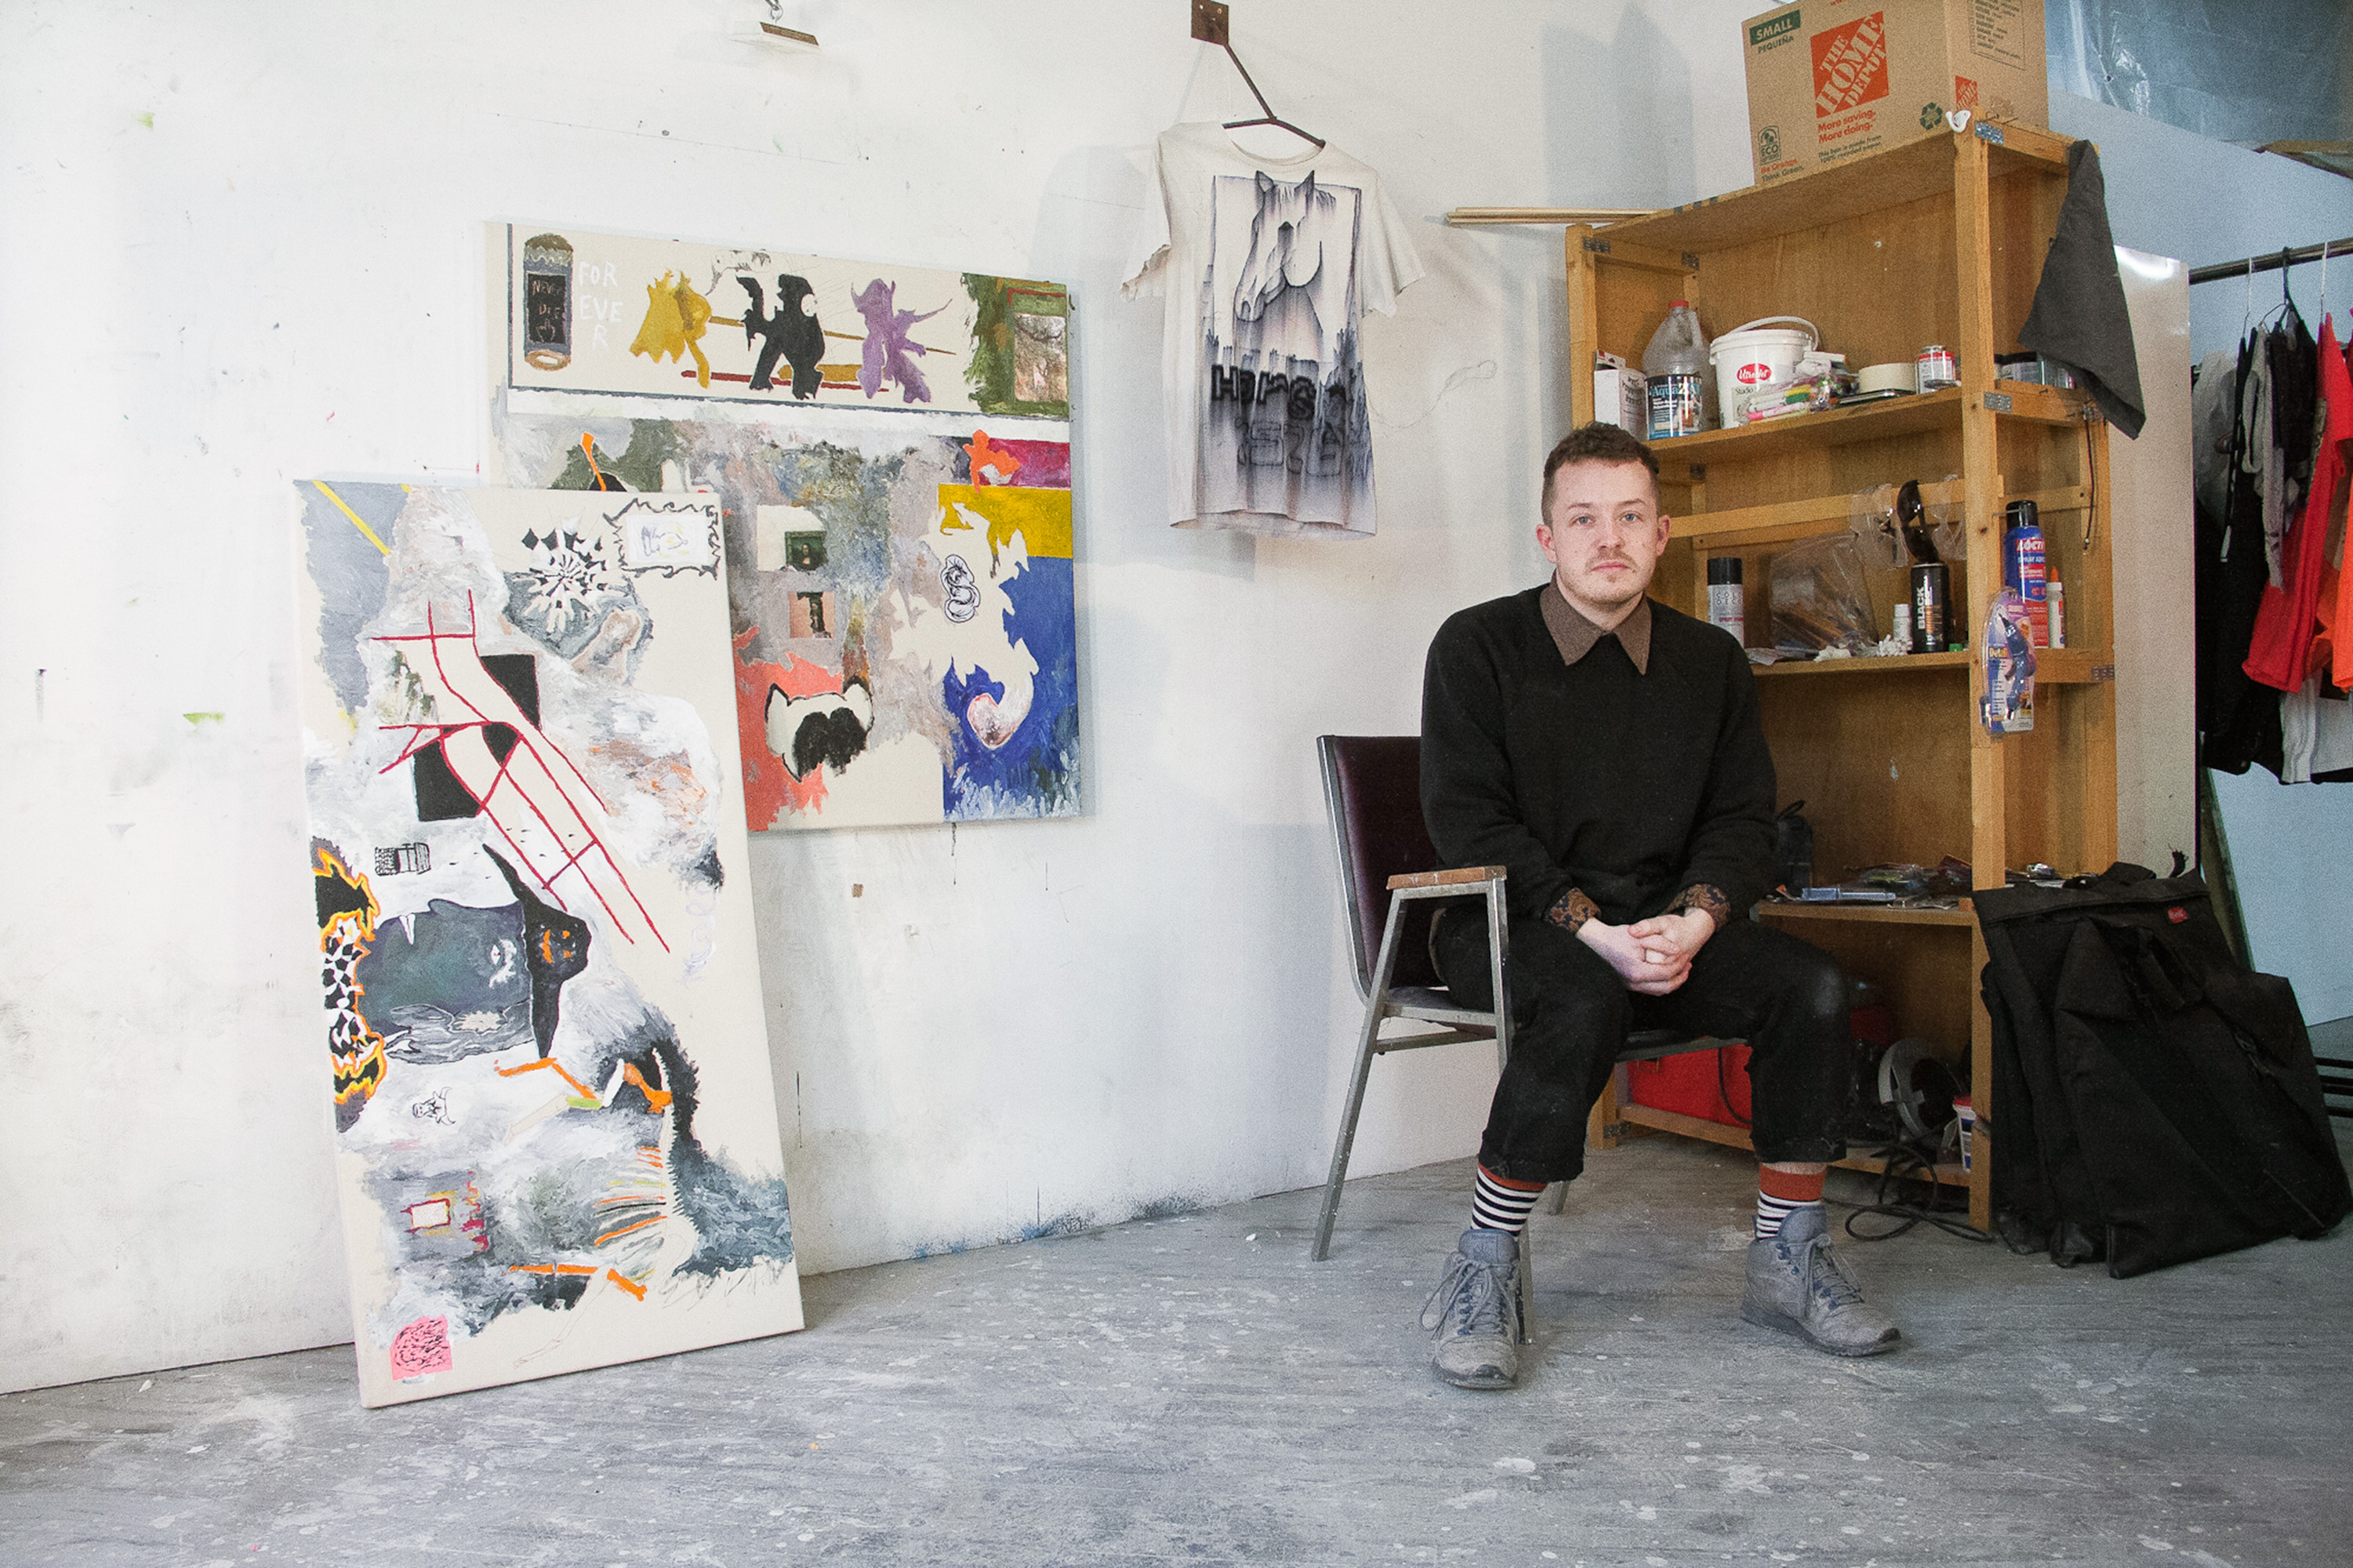 Portrait of the artist in his studio. Image credit: S. Nicole Lane.